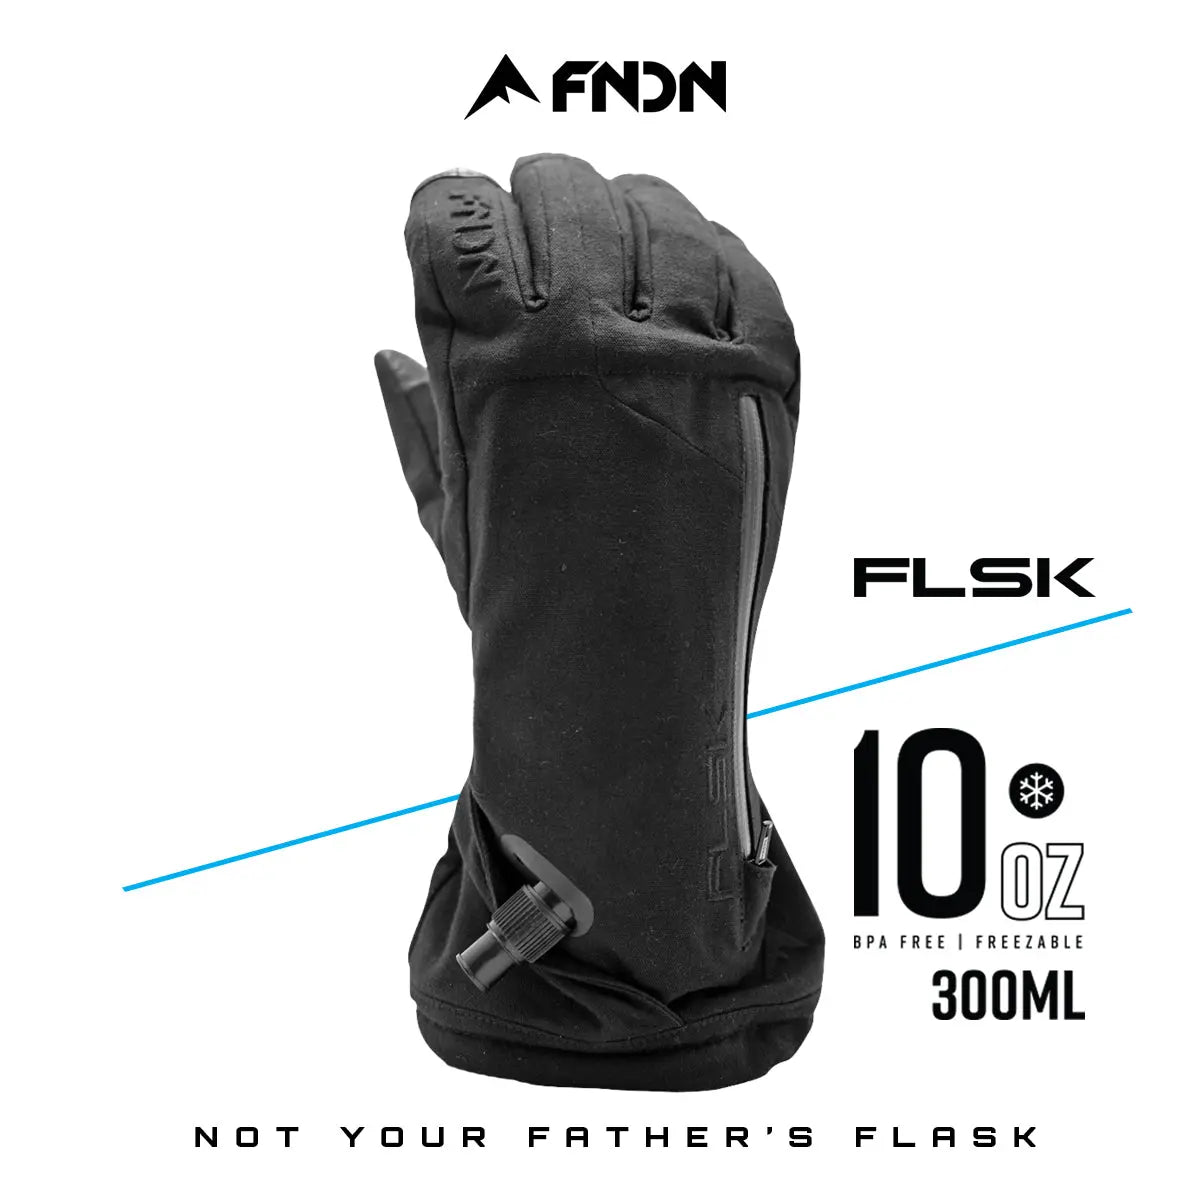 FNDN FLSK Glove - The FLASK GLOVE